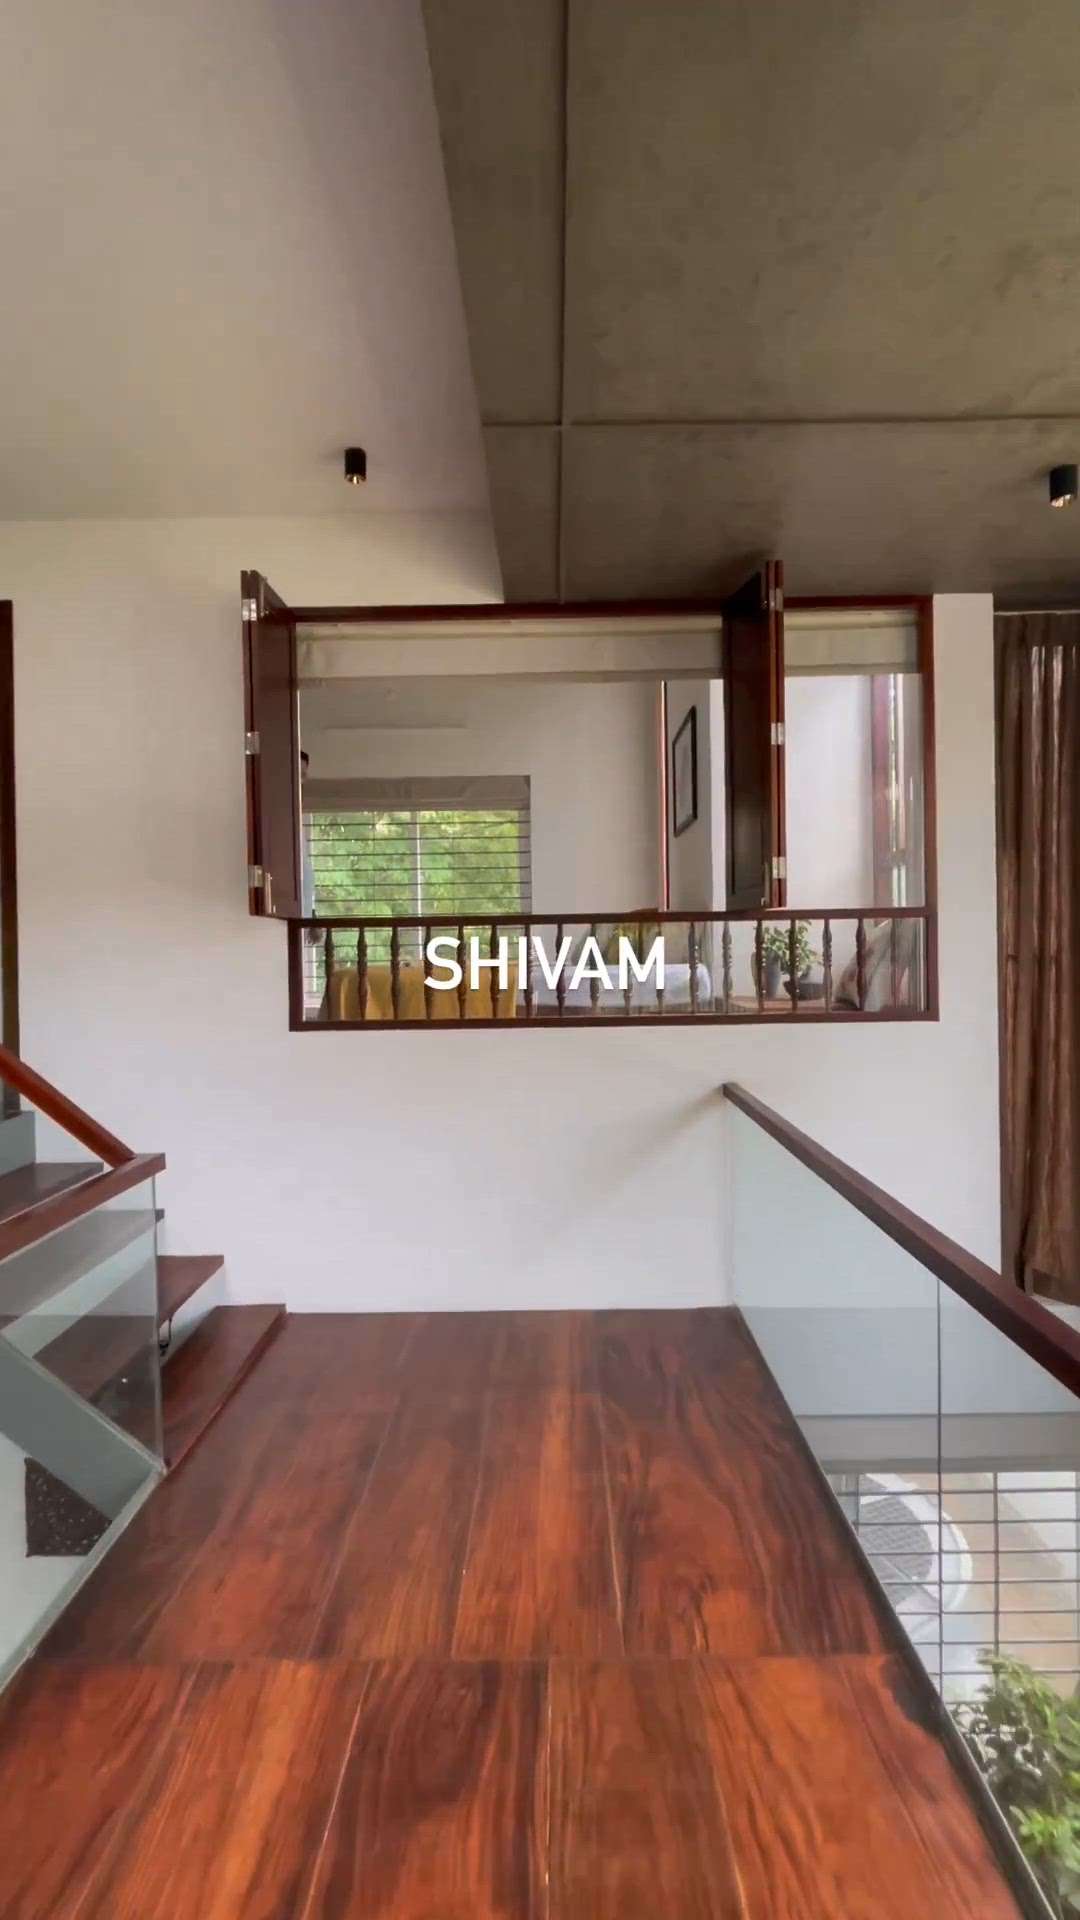 SHIVAM -

Designed by @yuugadesigns